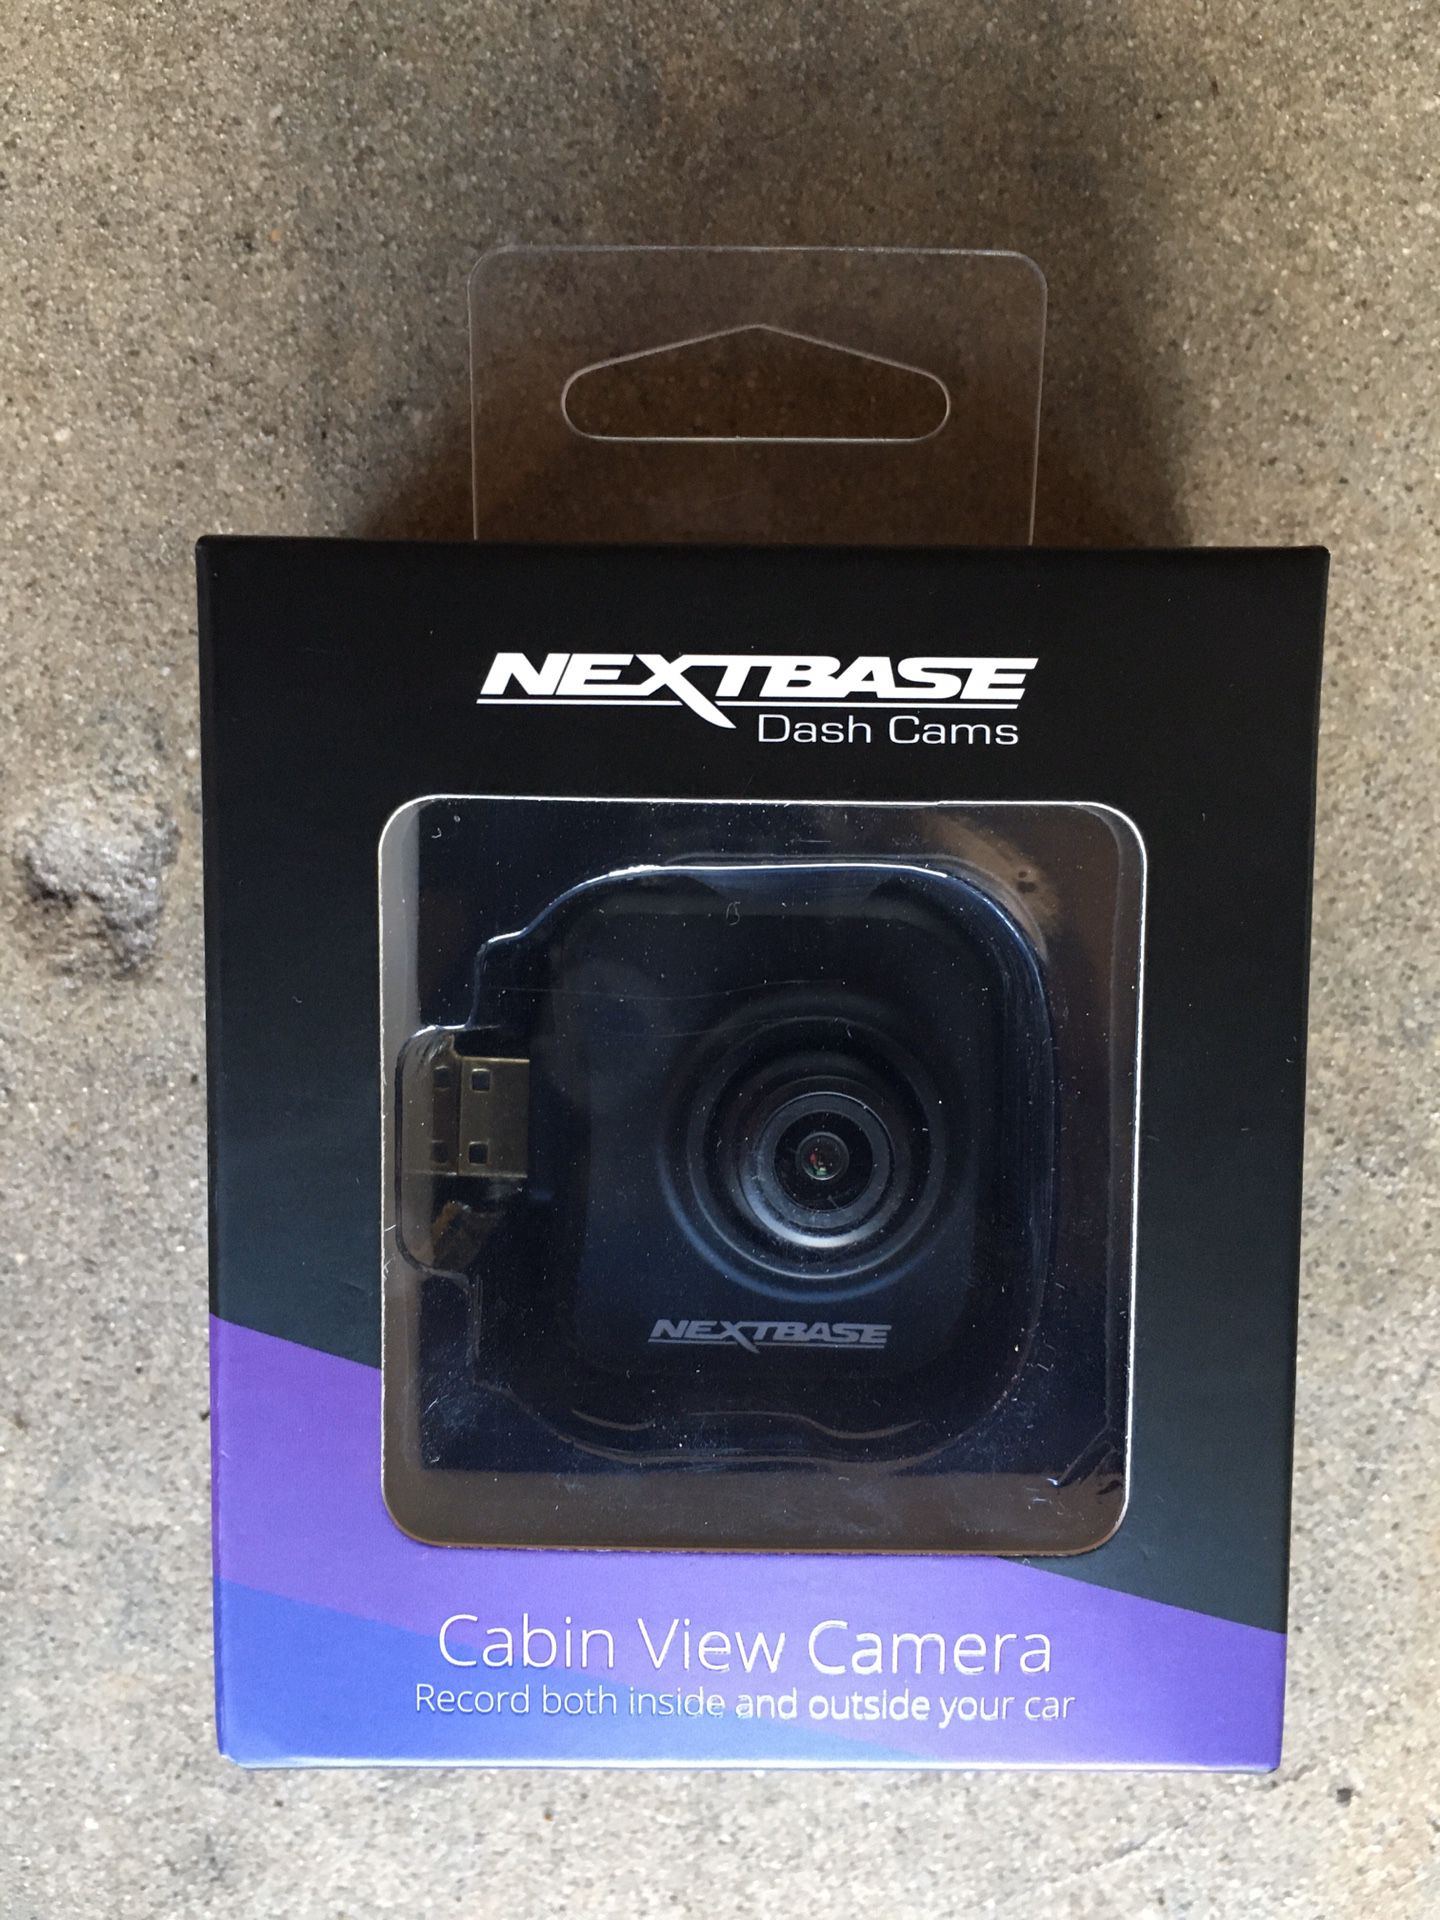 Next Base Dash Cams Cabin View Camera